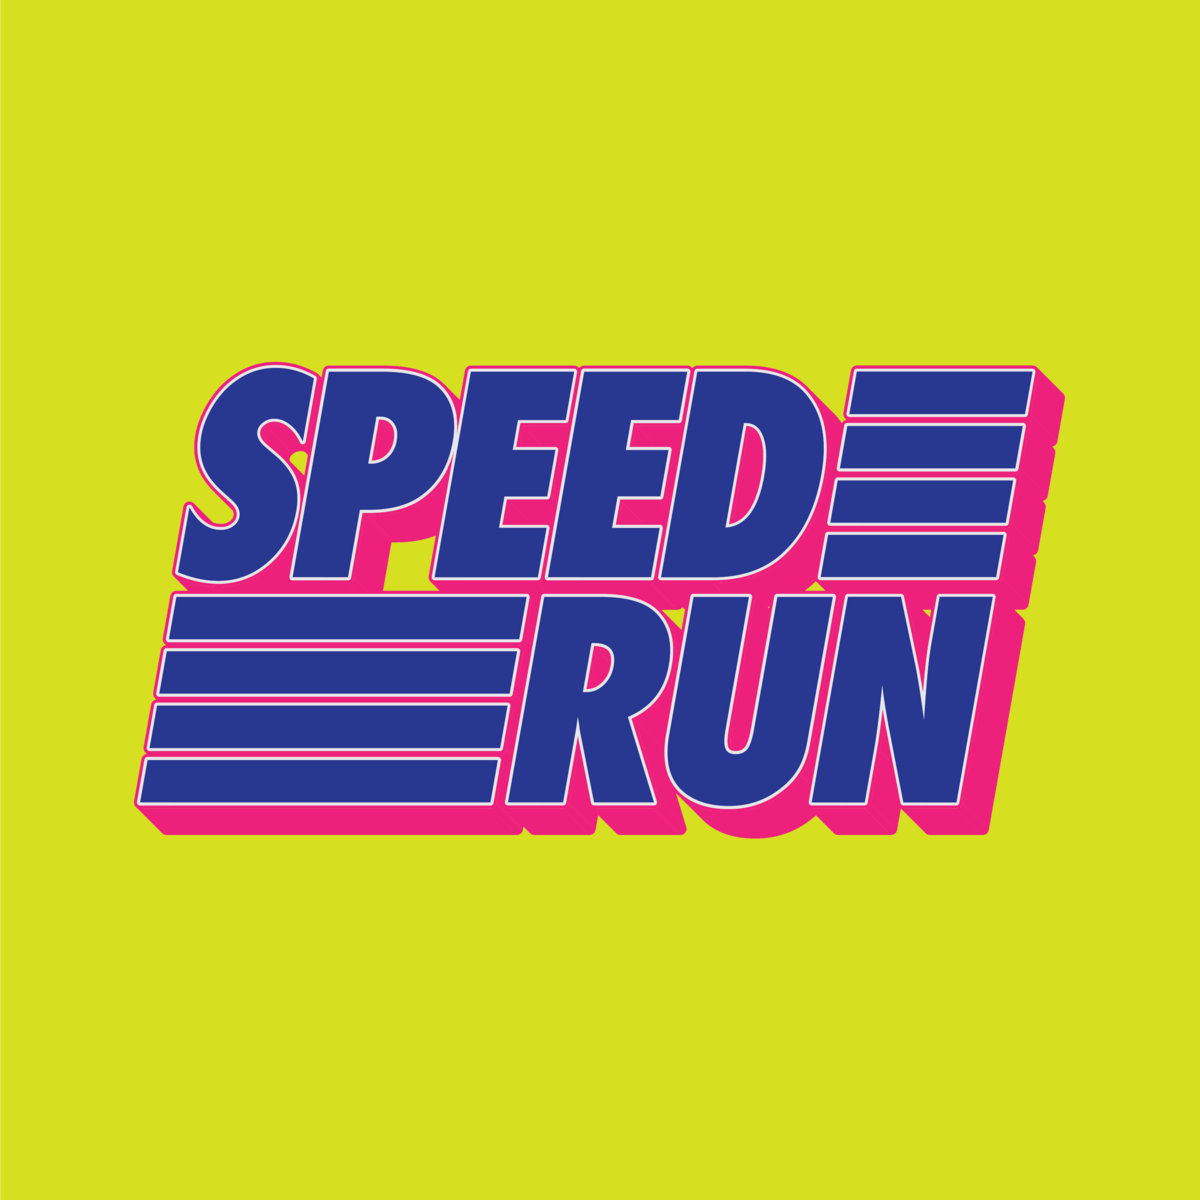 File:Speedrun.com text logo.svg - Wikimedia Commons